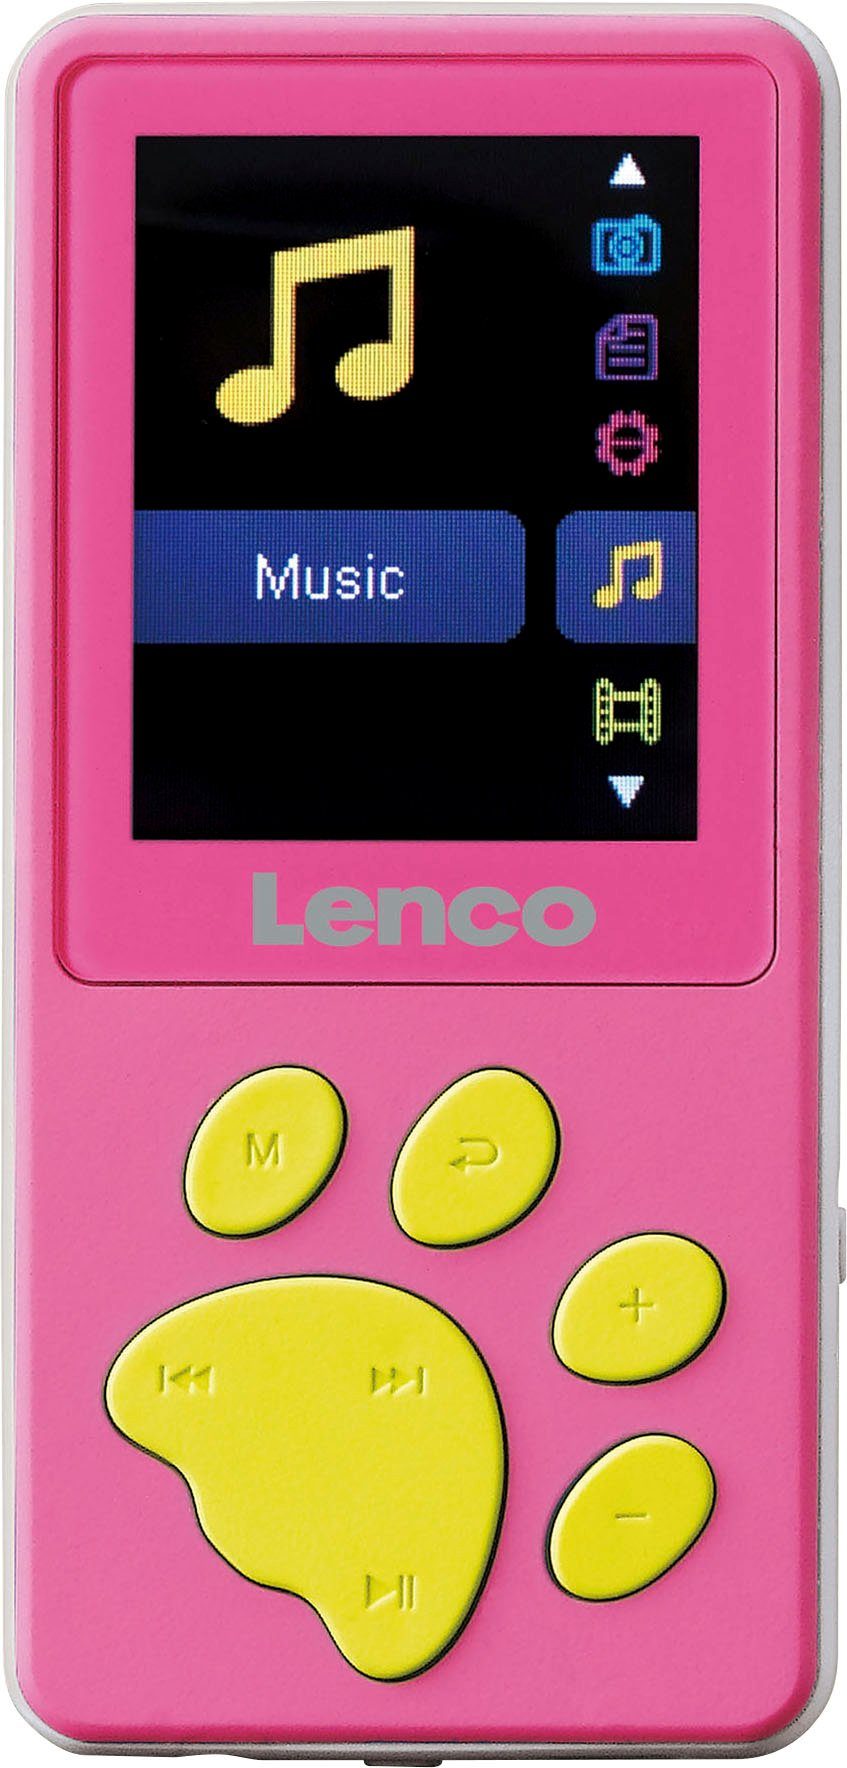 MP4-Player Lenco Pink (128 GB) Xemio-560 MP3-Player